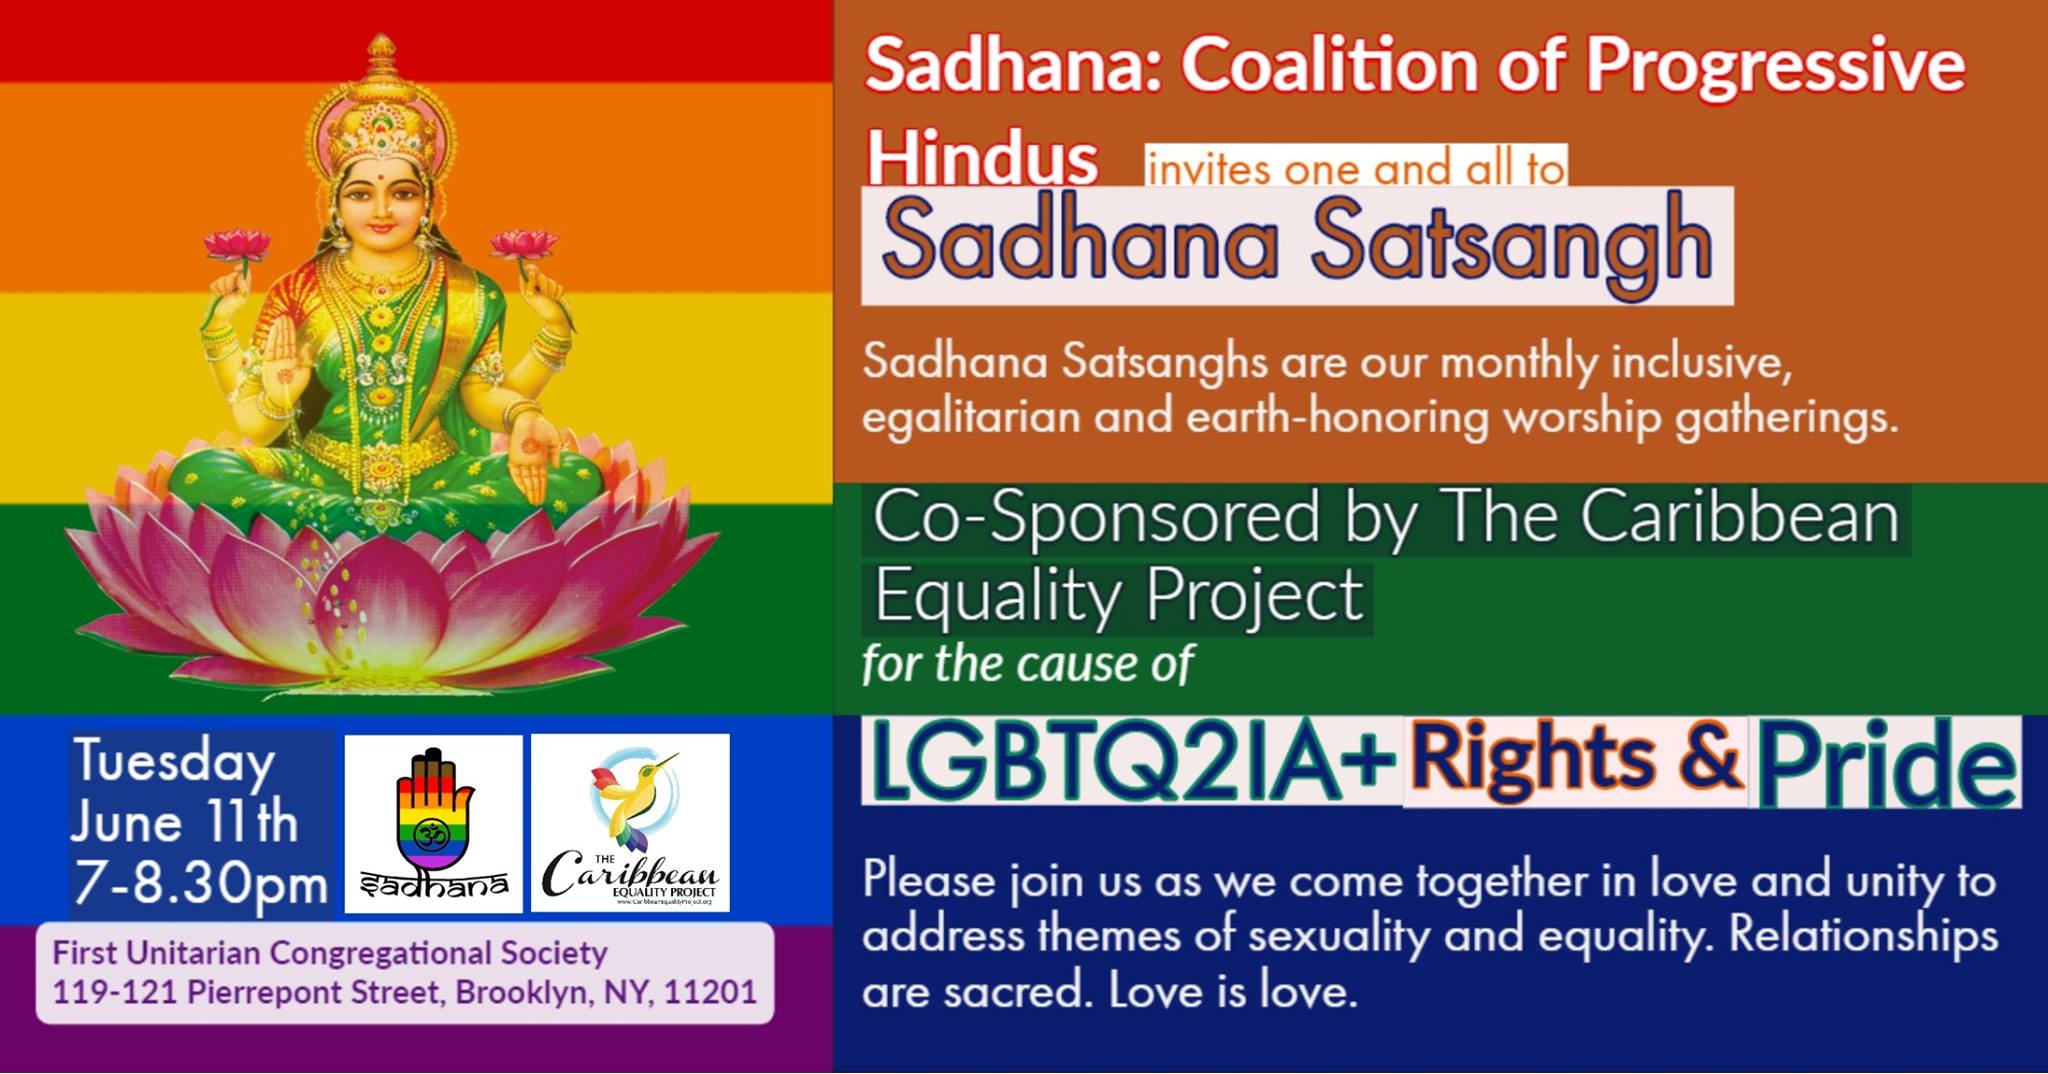 Sadhana’s Satsangh for Pride